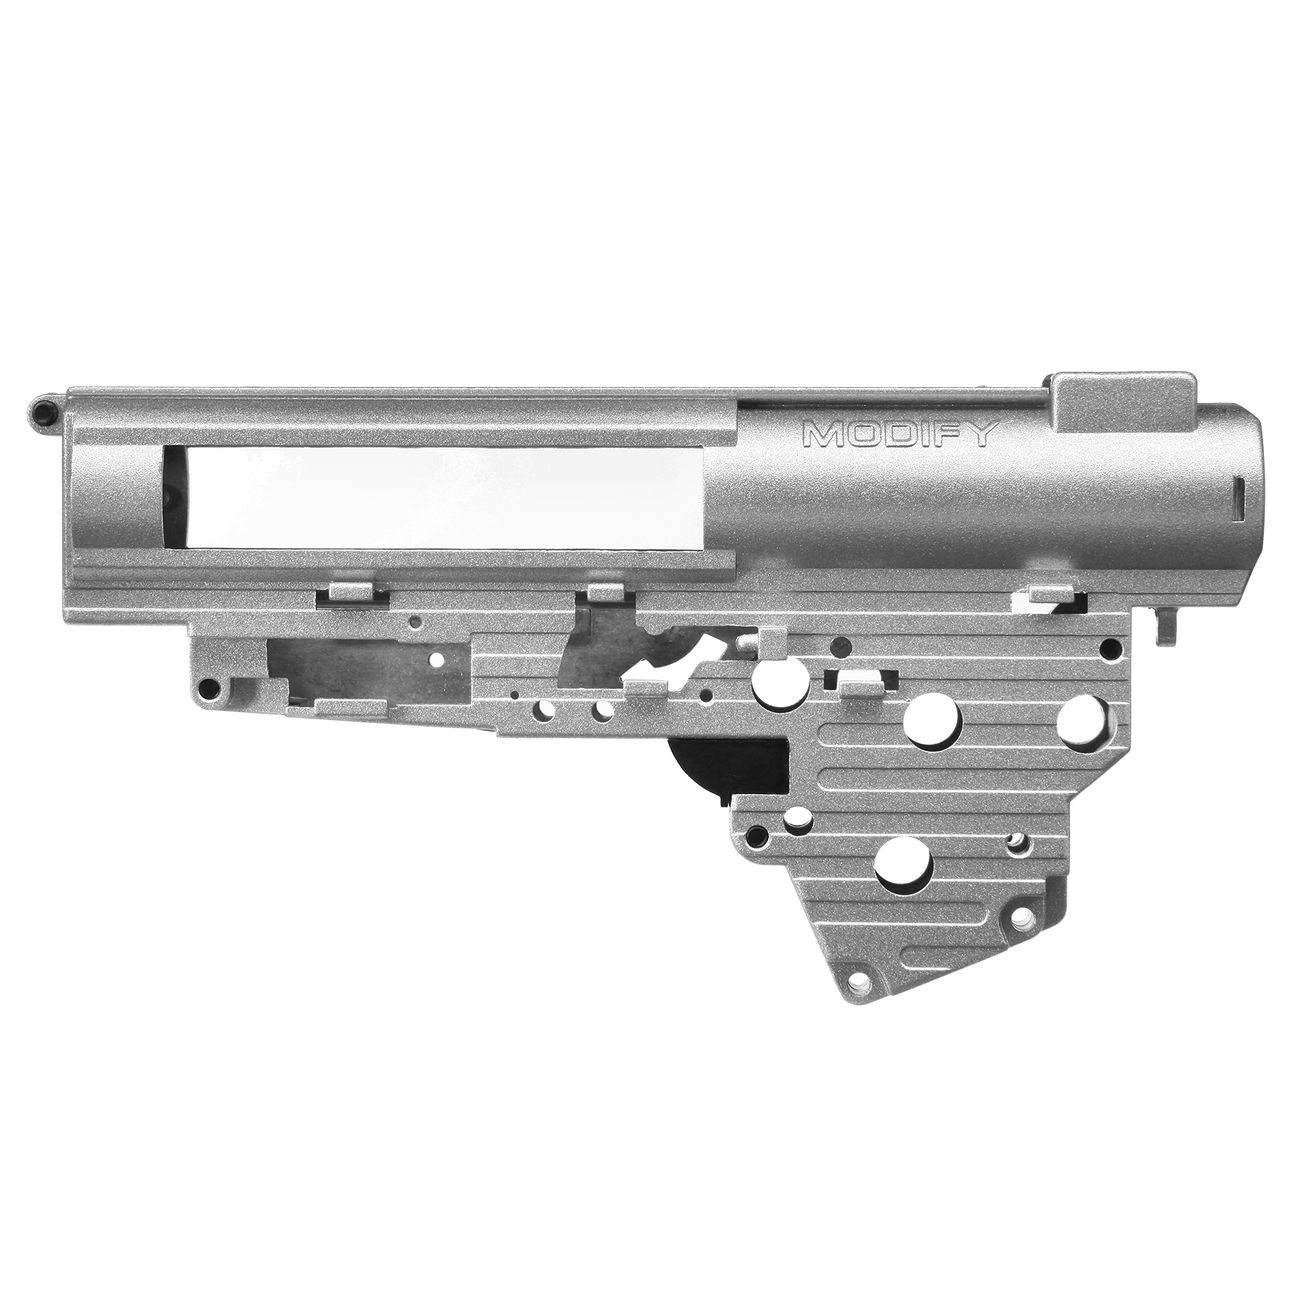 Modify 8mm Torus Aluminium Gearboxgehuse Version 3 inkl. Zubehr silber Bild 2